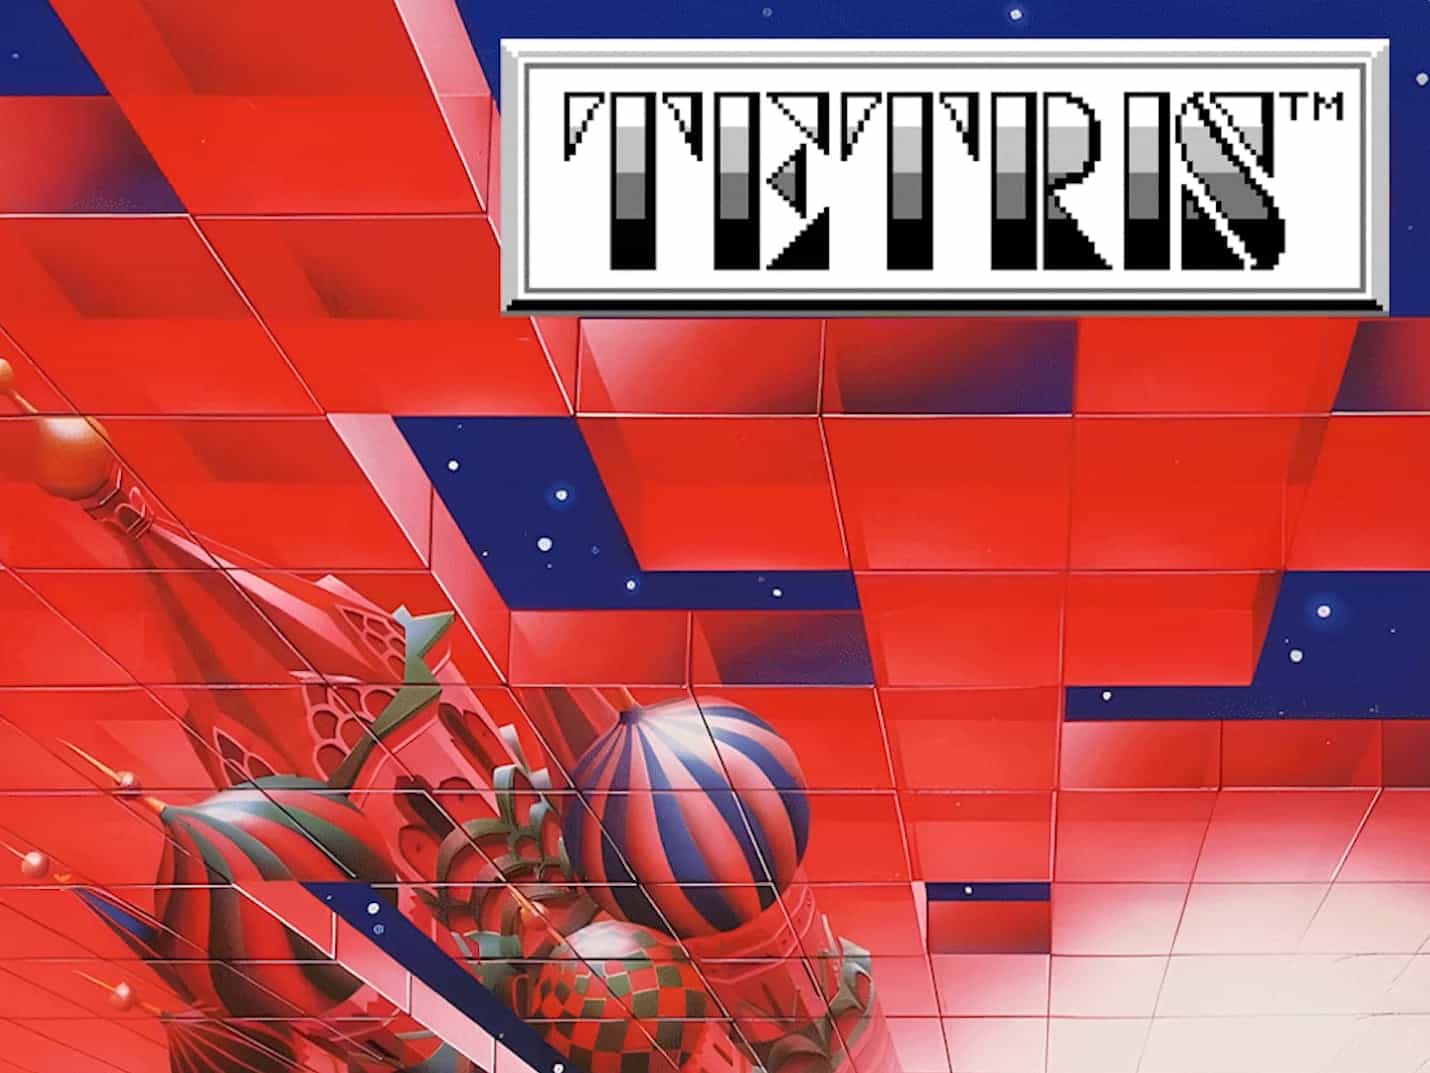 The super rare Minuet Version of the original Tetris